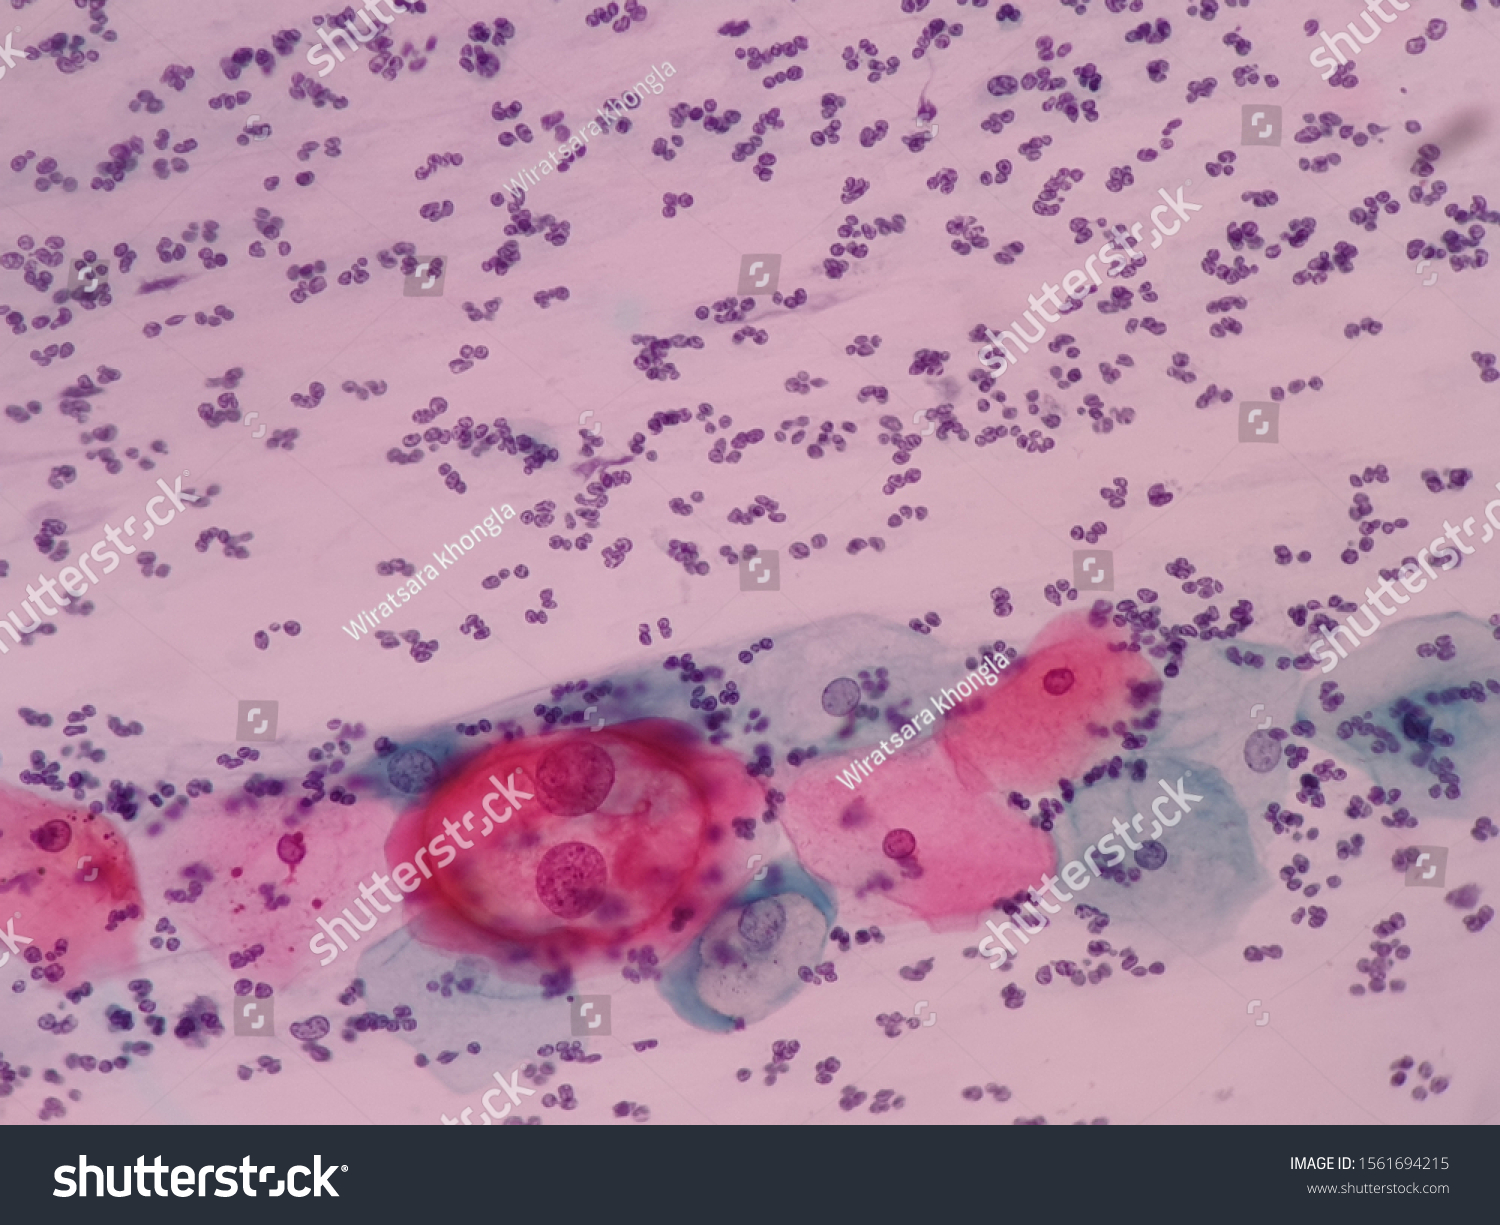 Human Papilloma Virus View Microscopy Koilocytes Stock Photo 1561694215